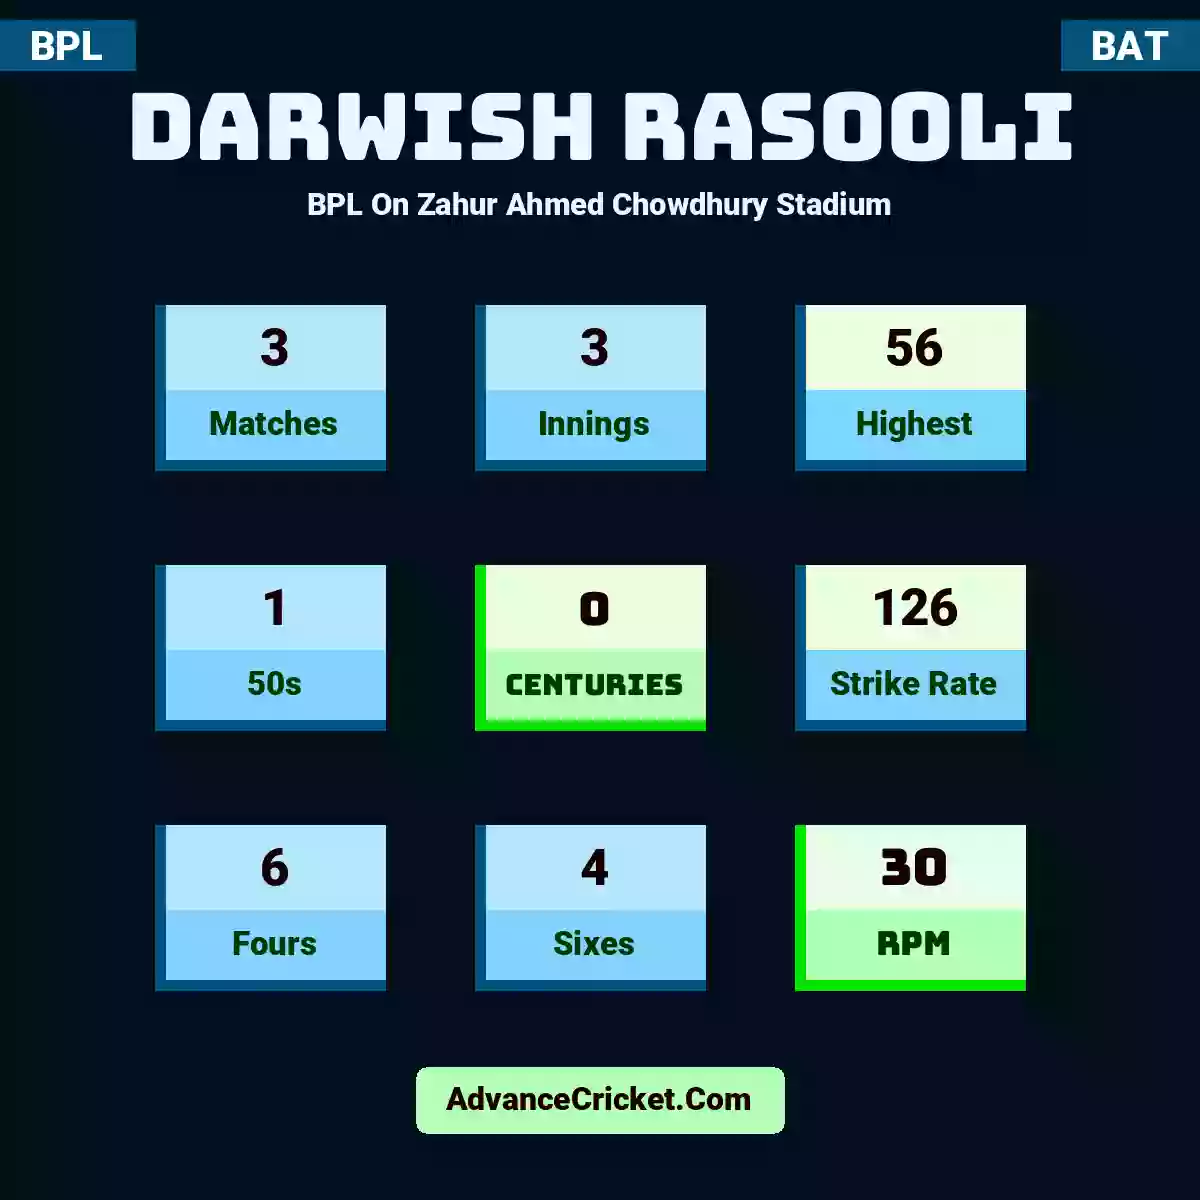 Darwish Rasooli BPL  On Zahur Ahmed Chowdhury Stadium, Darwish Rasooli played 3 matches, scored 56 runs as highest, 1 half-centuries, and 0 centuries, with a strike rate of 126. D.Rasooli hit 6 fours and 4 sixes, with an RPM of 30.